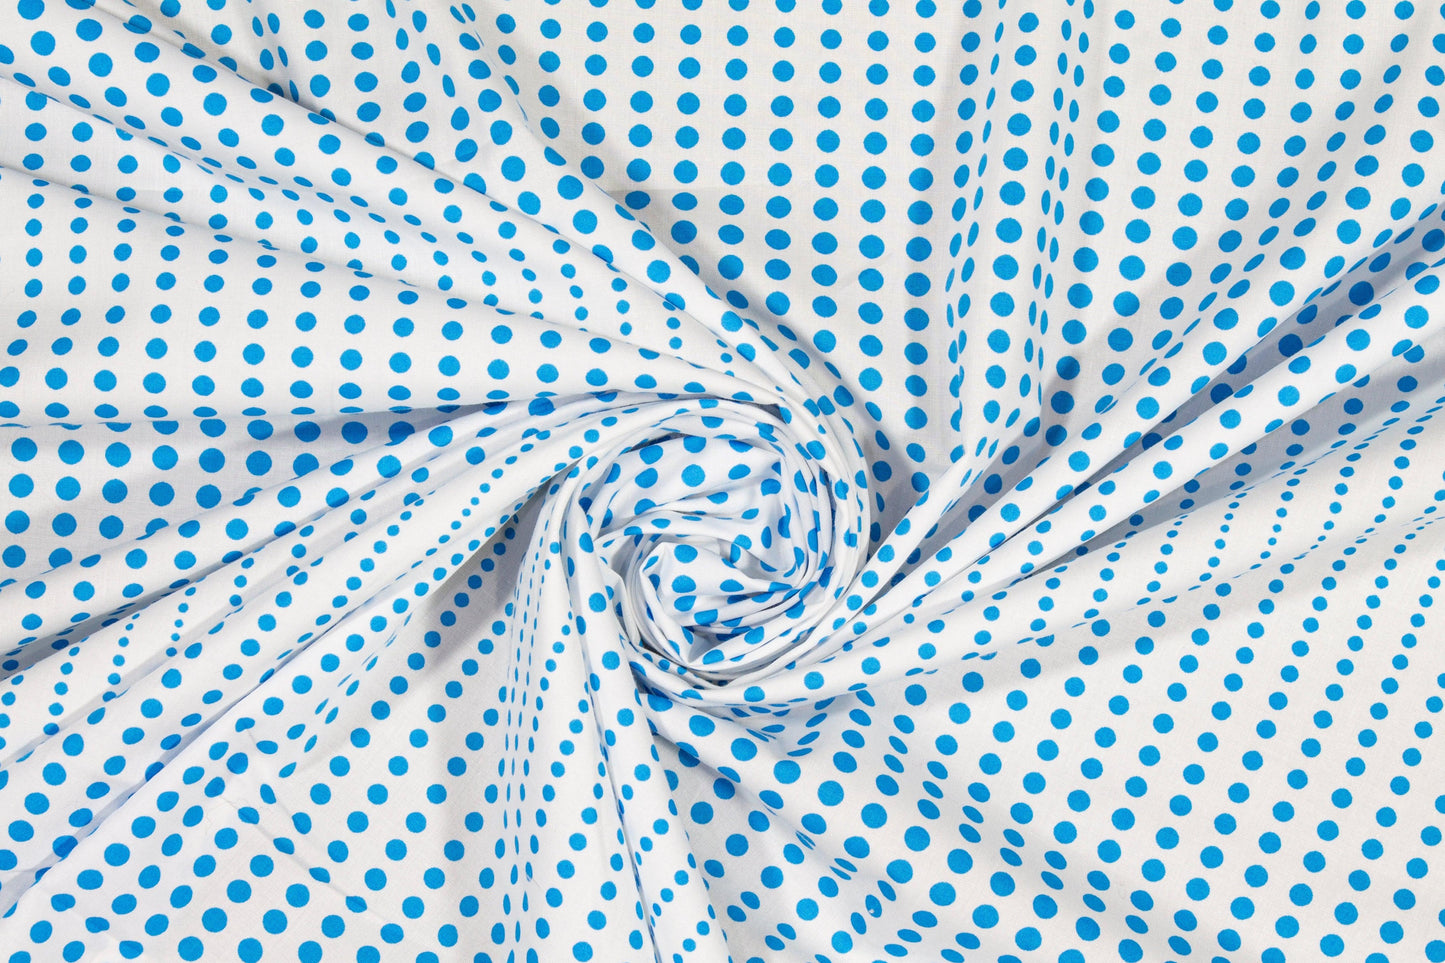 Polka Dot Cotton Print - Blue and White - Prime Fabrics